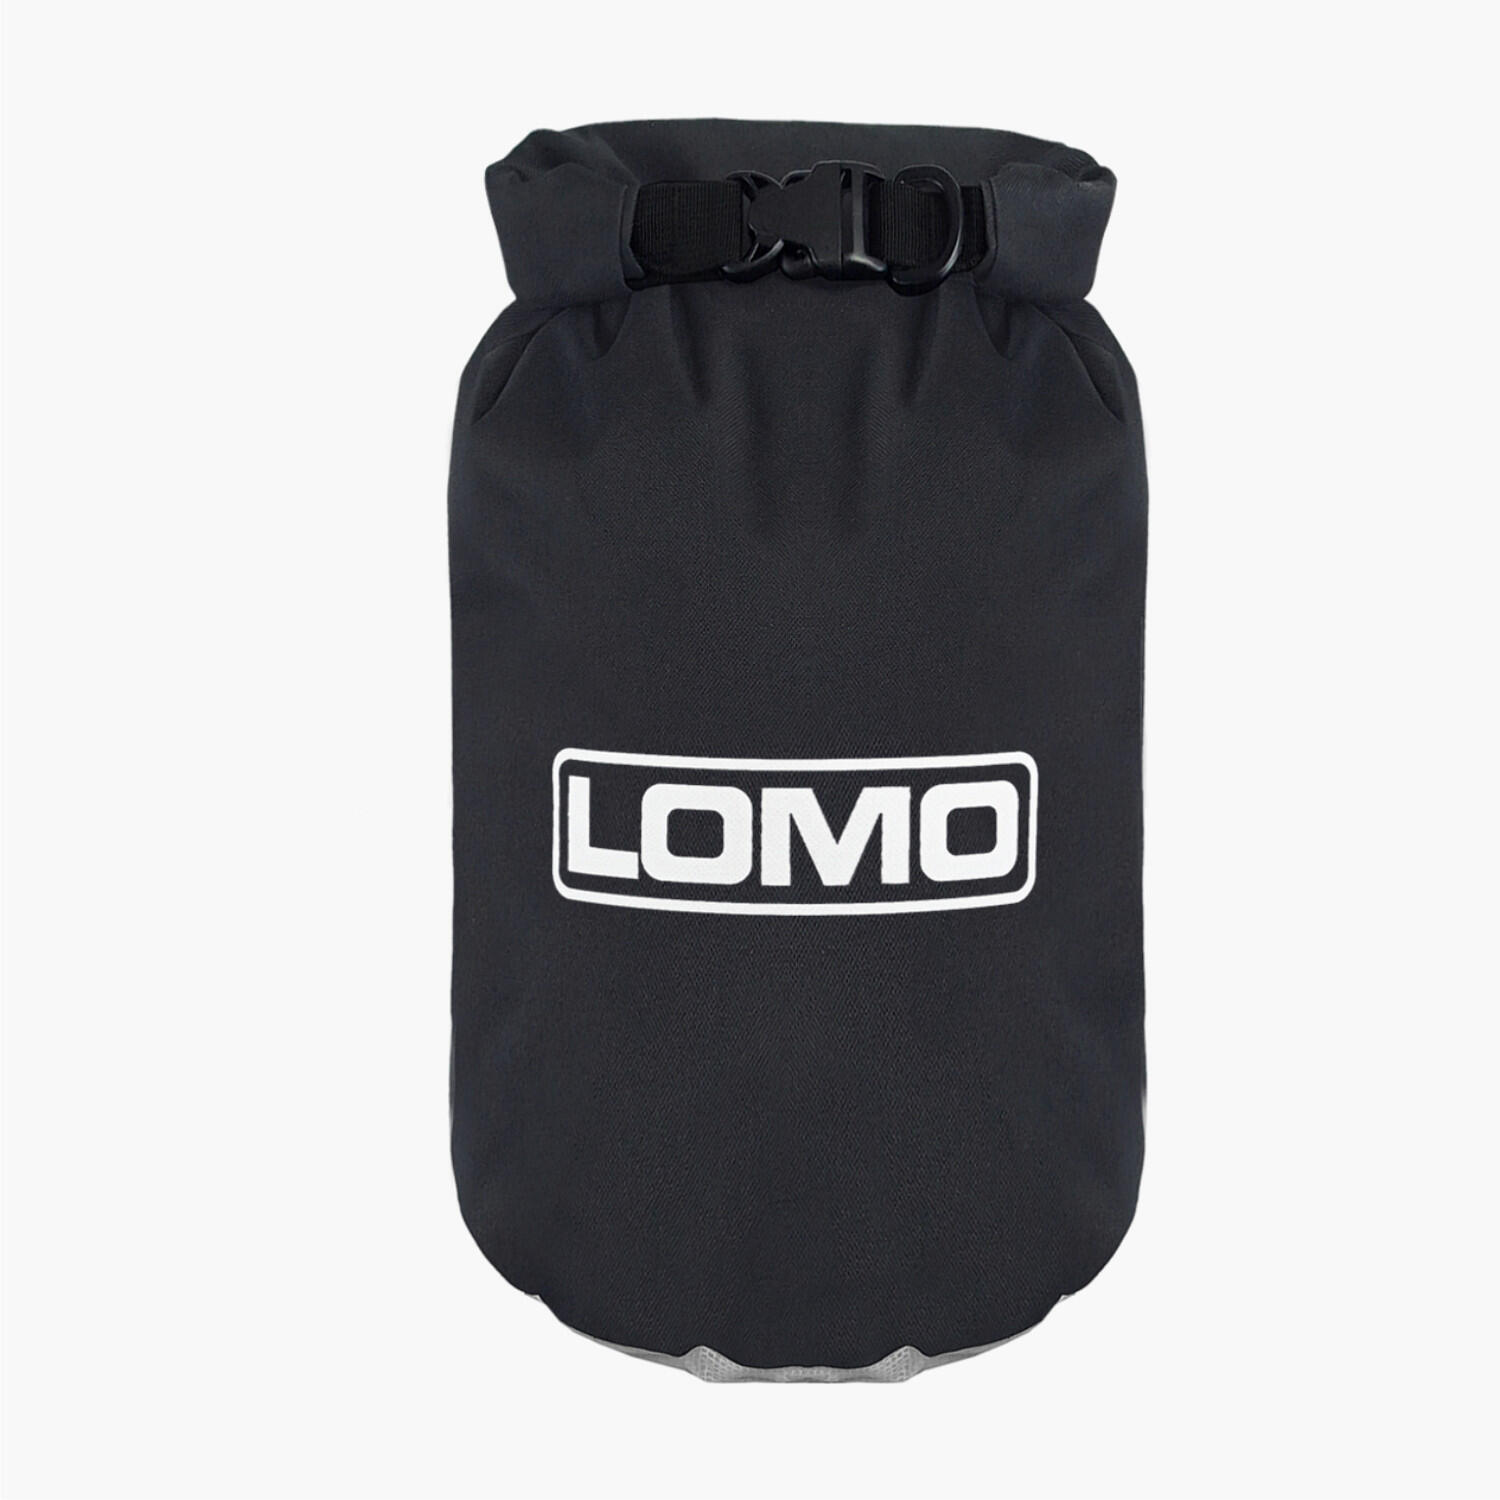 Lomo 5L Dry Bag - Black with Window 4/7